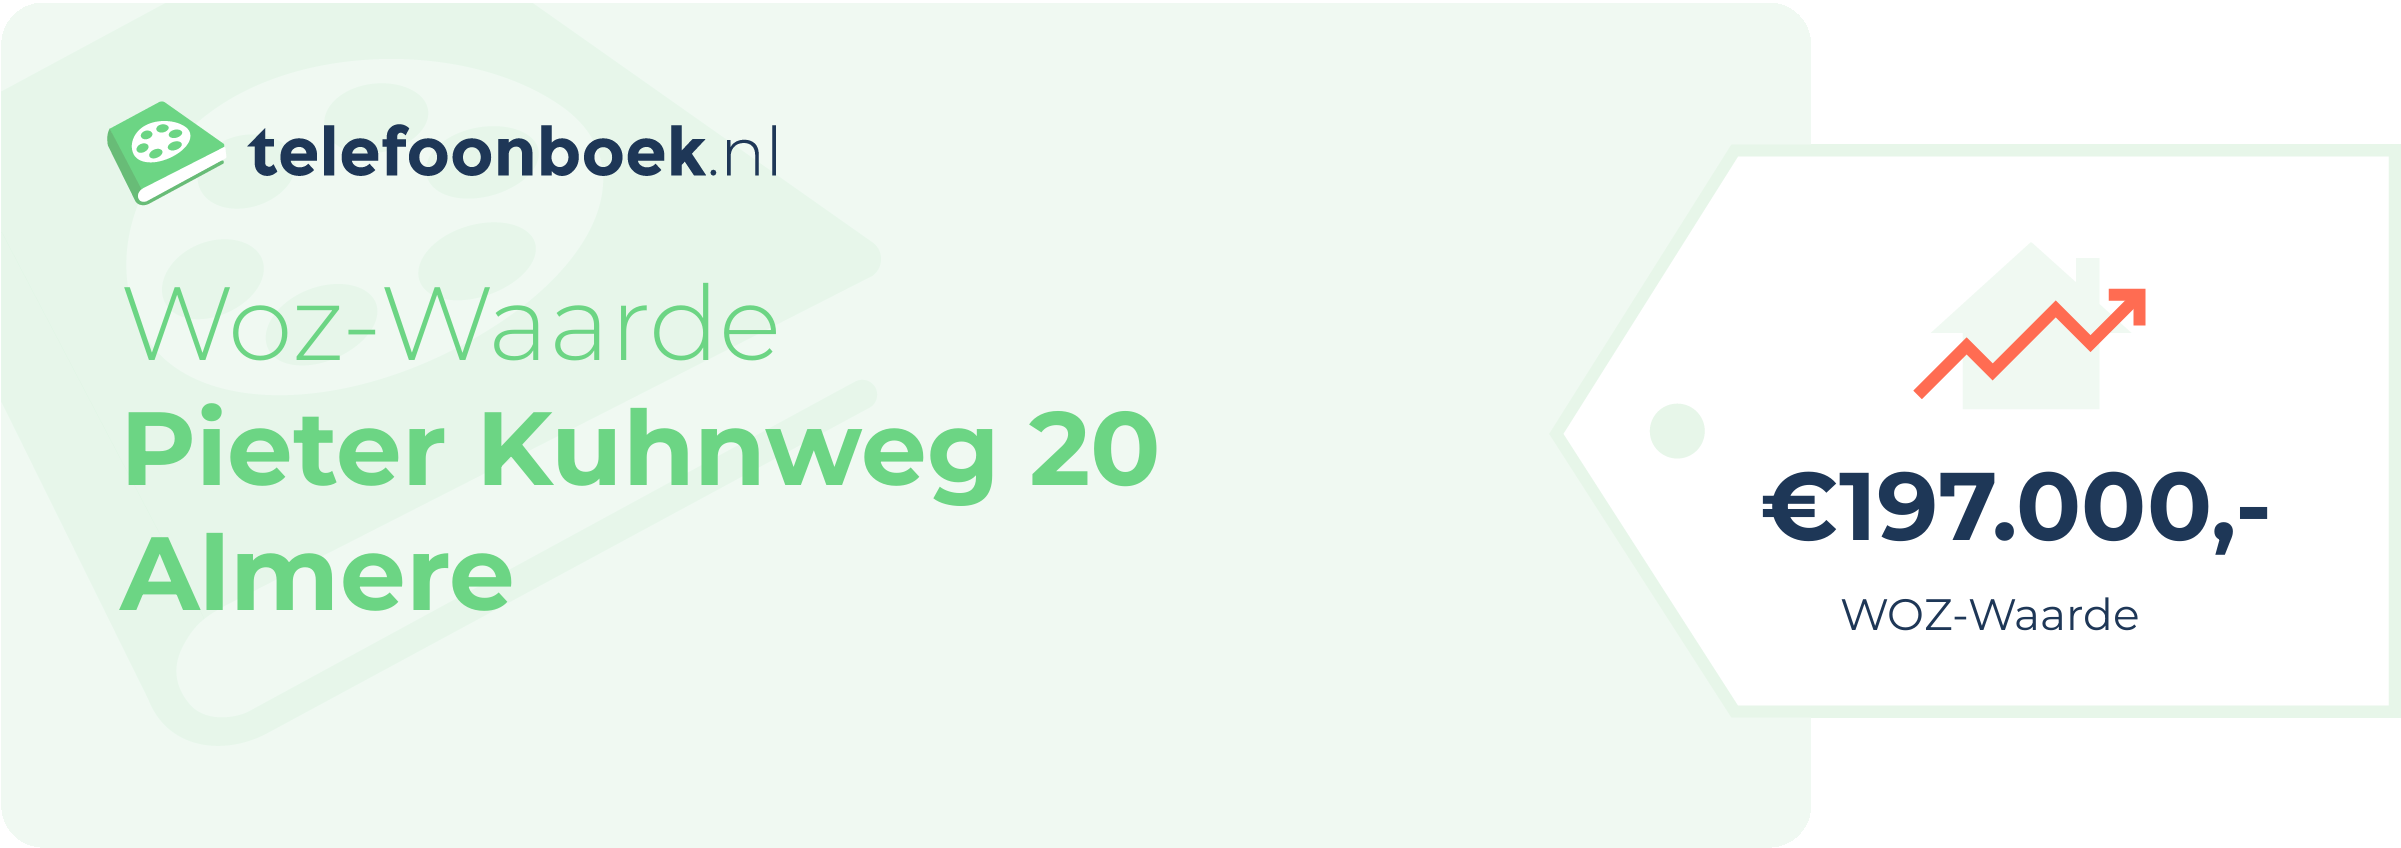 WOZ-waarde Pieter Kuhnweg 20 Almere